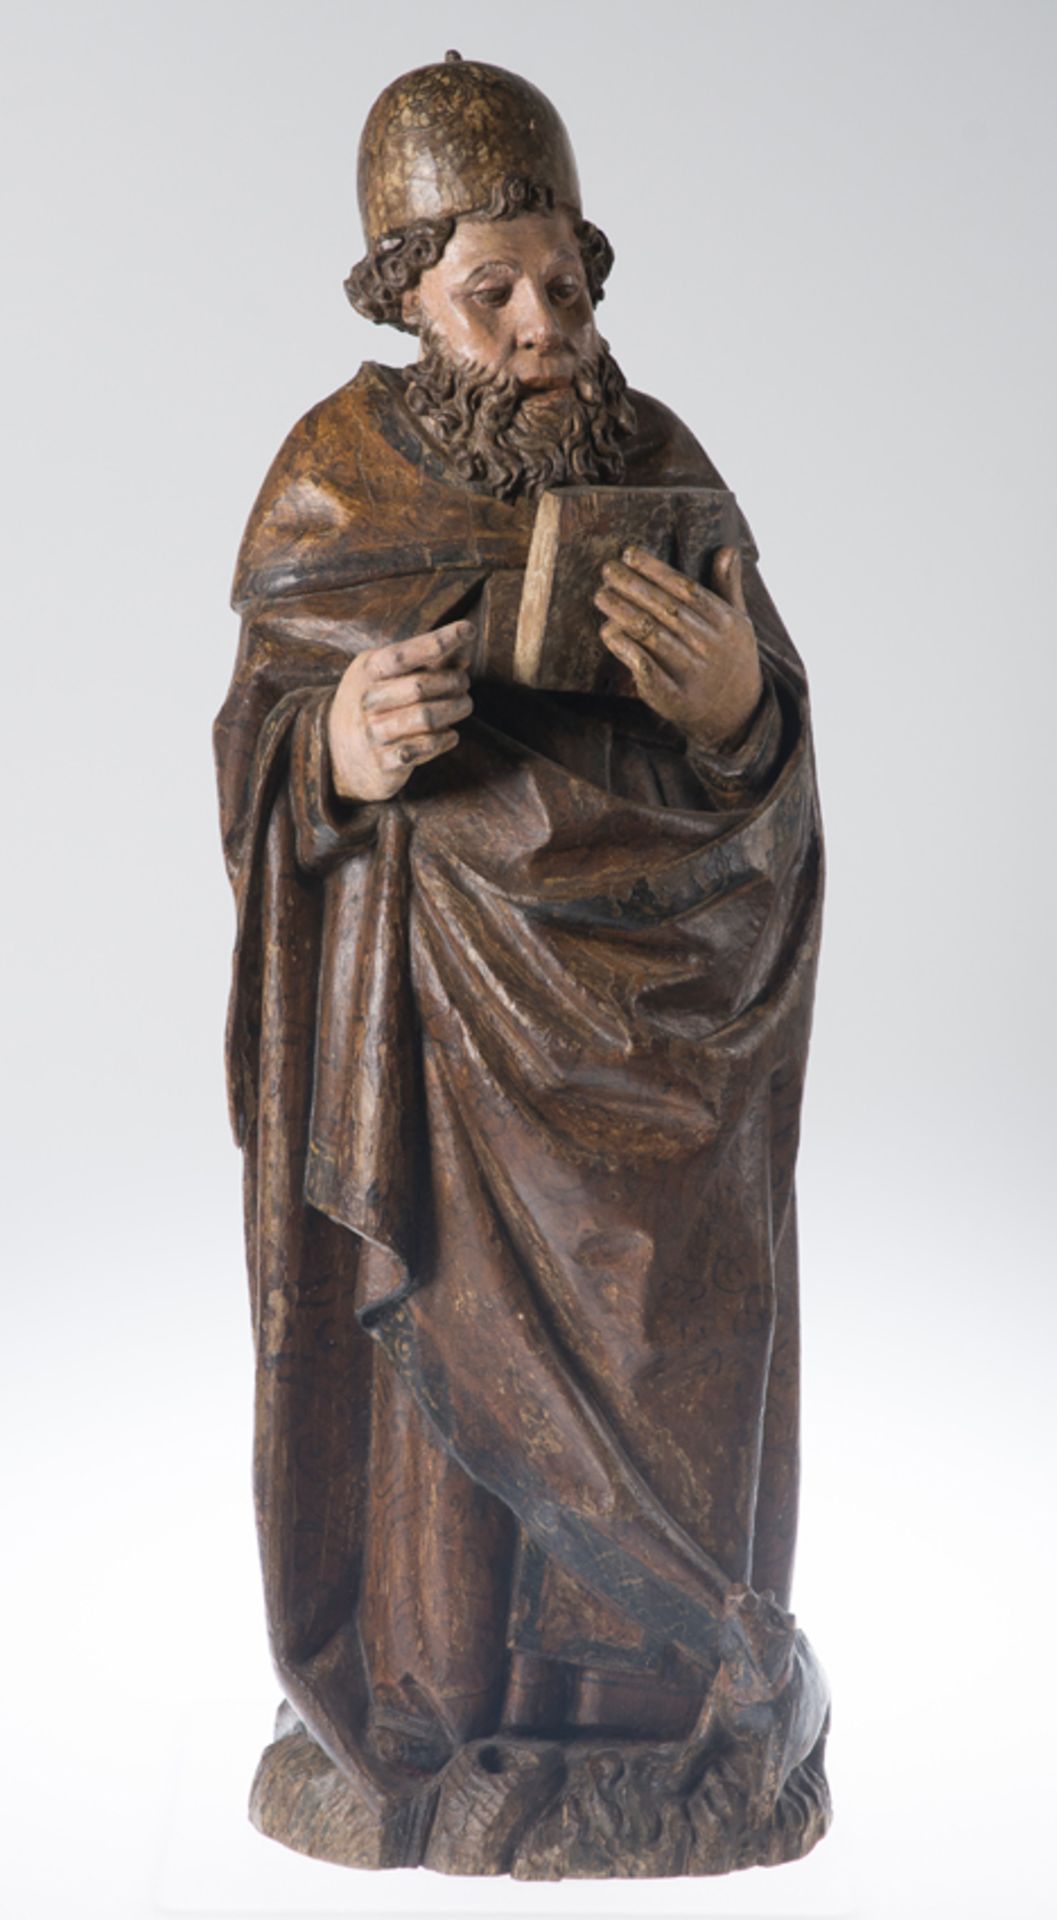 "Saint Anthony". Carved wooden sculpture. Castilian School. 15th century.